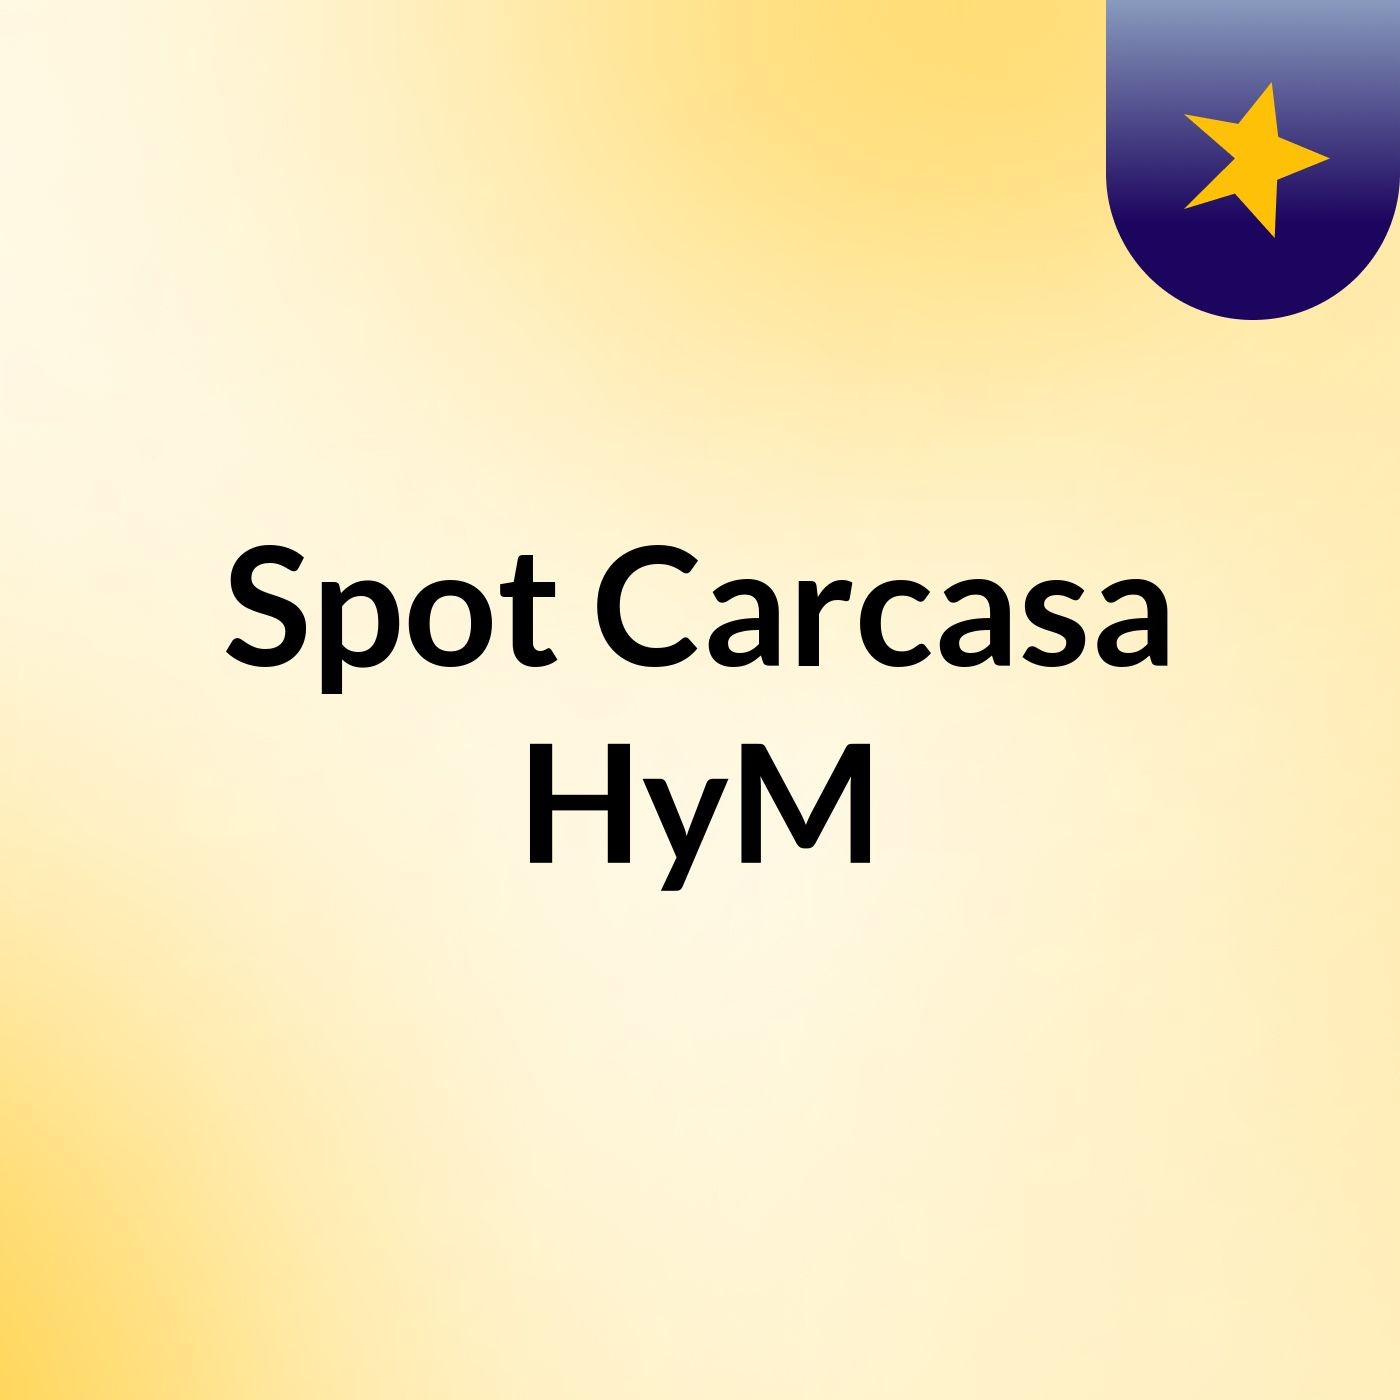 Spot Carcasa HyM